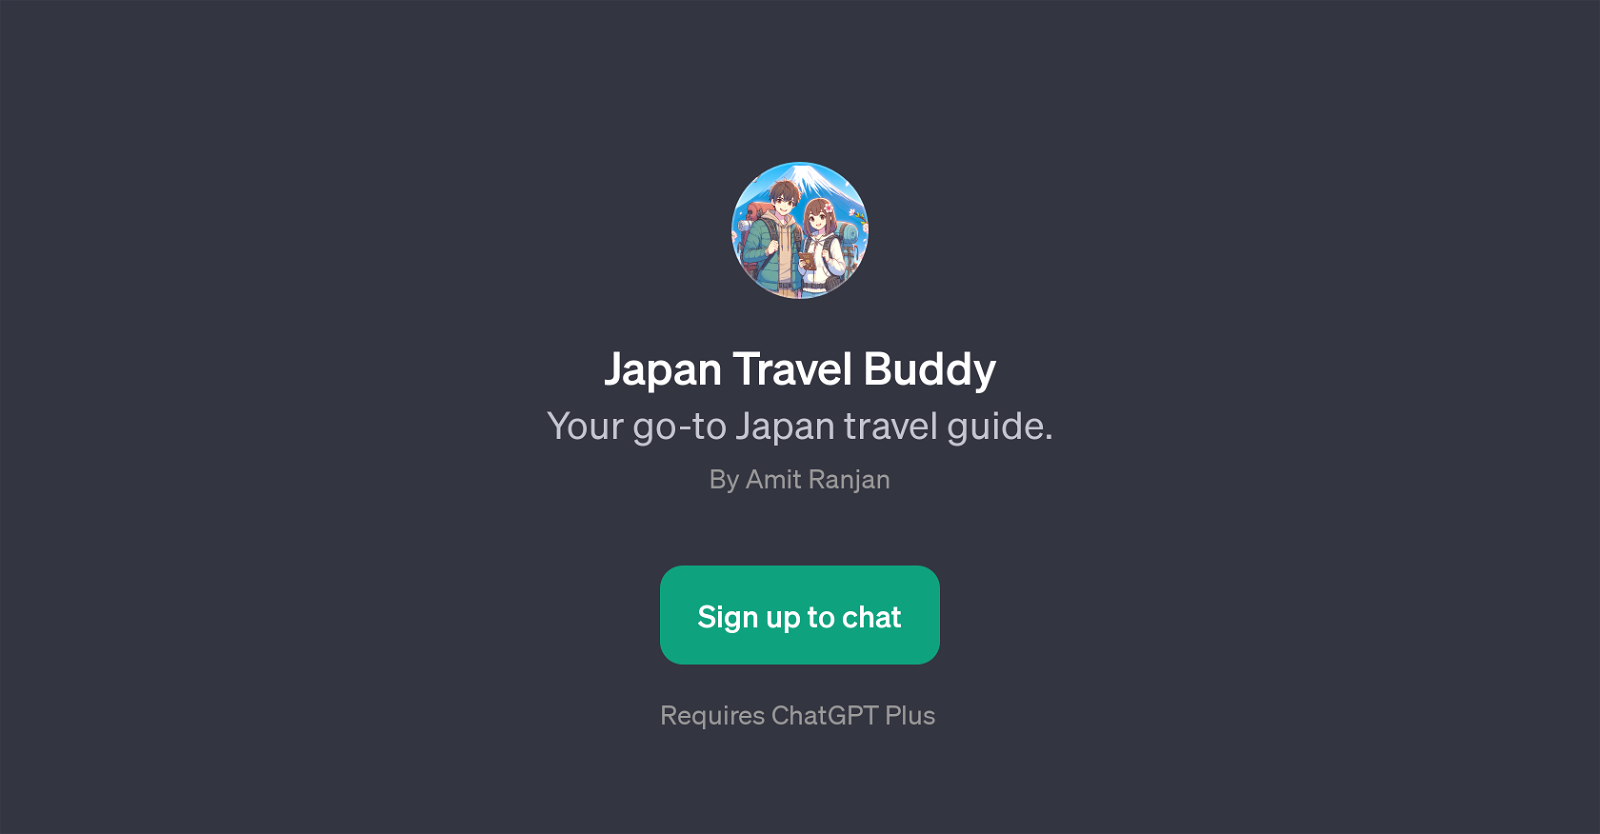 Japan Travel Buddy website